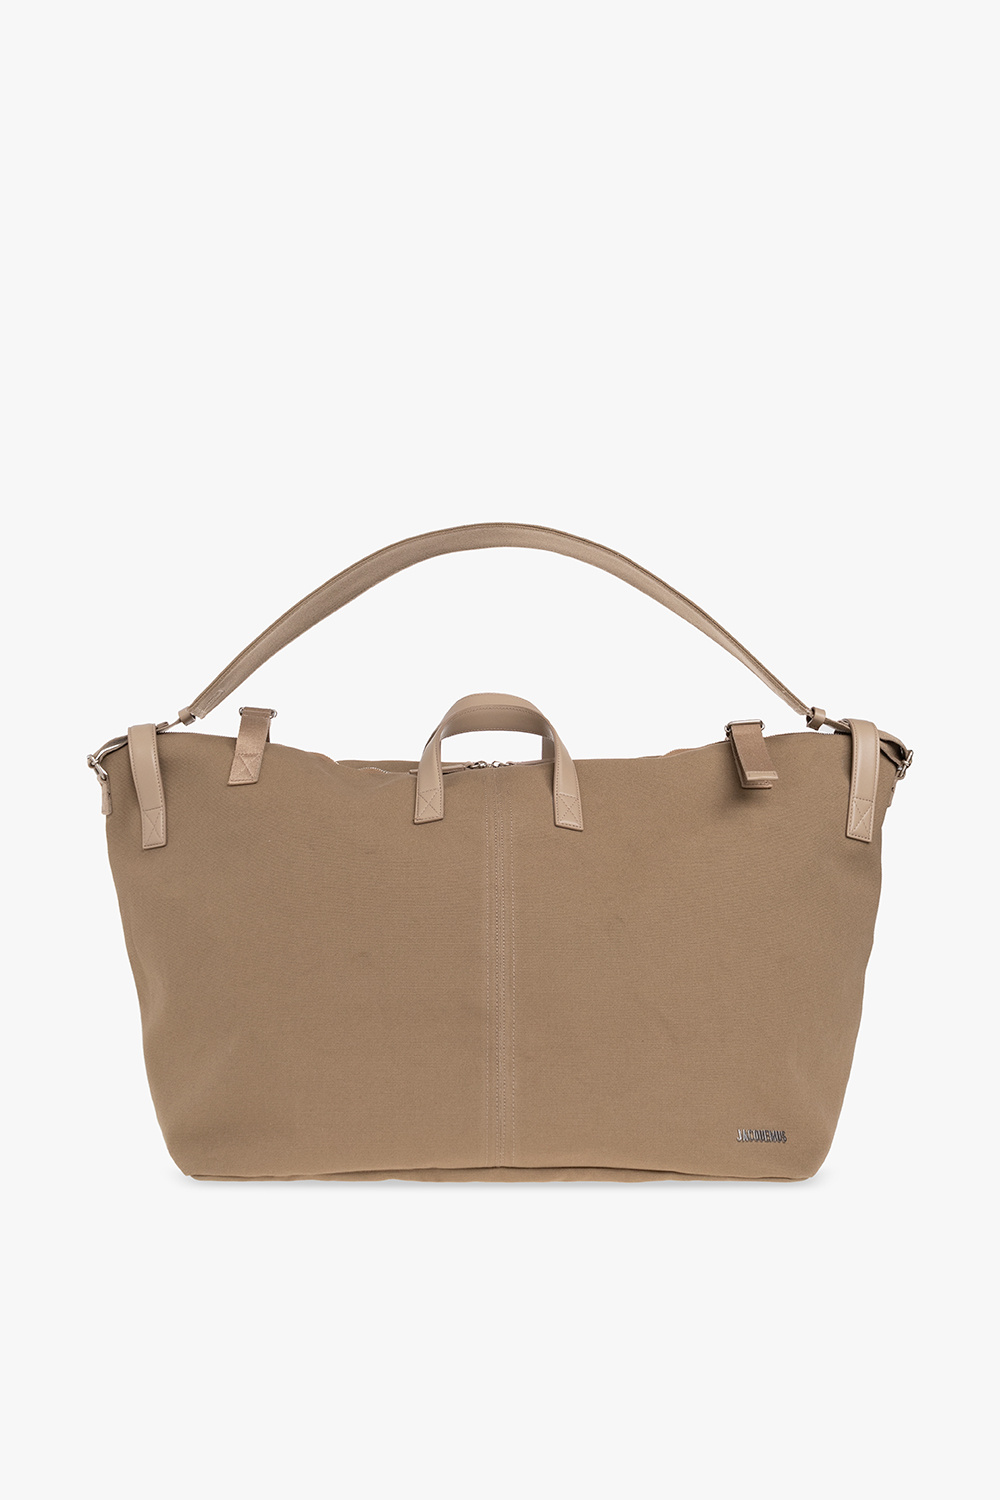 Louis Vuitton Sac Sport Bag - Vitkac shop online